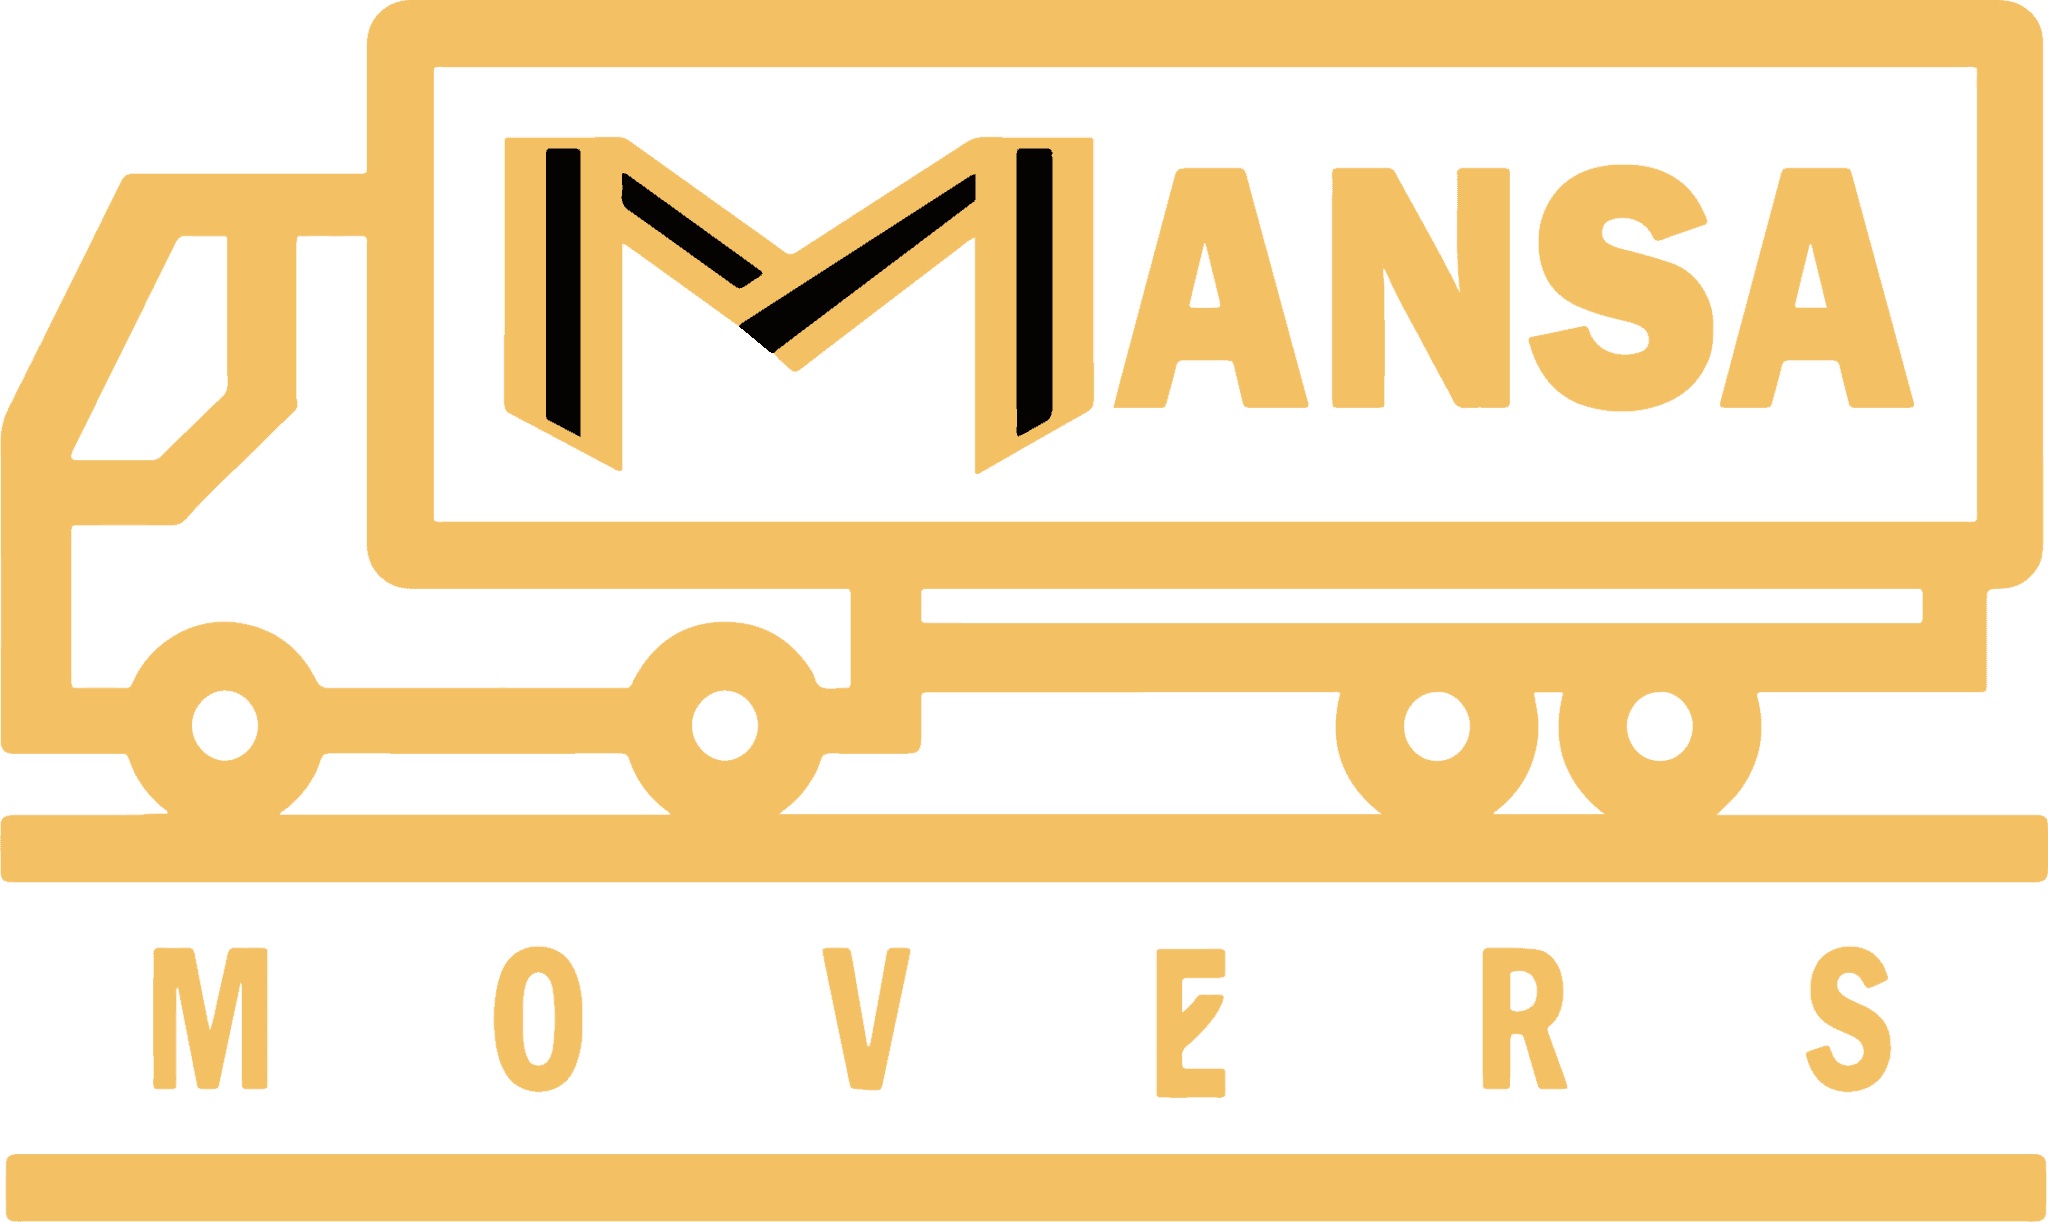 Mansa Movers